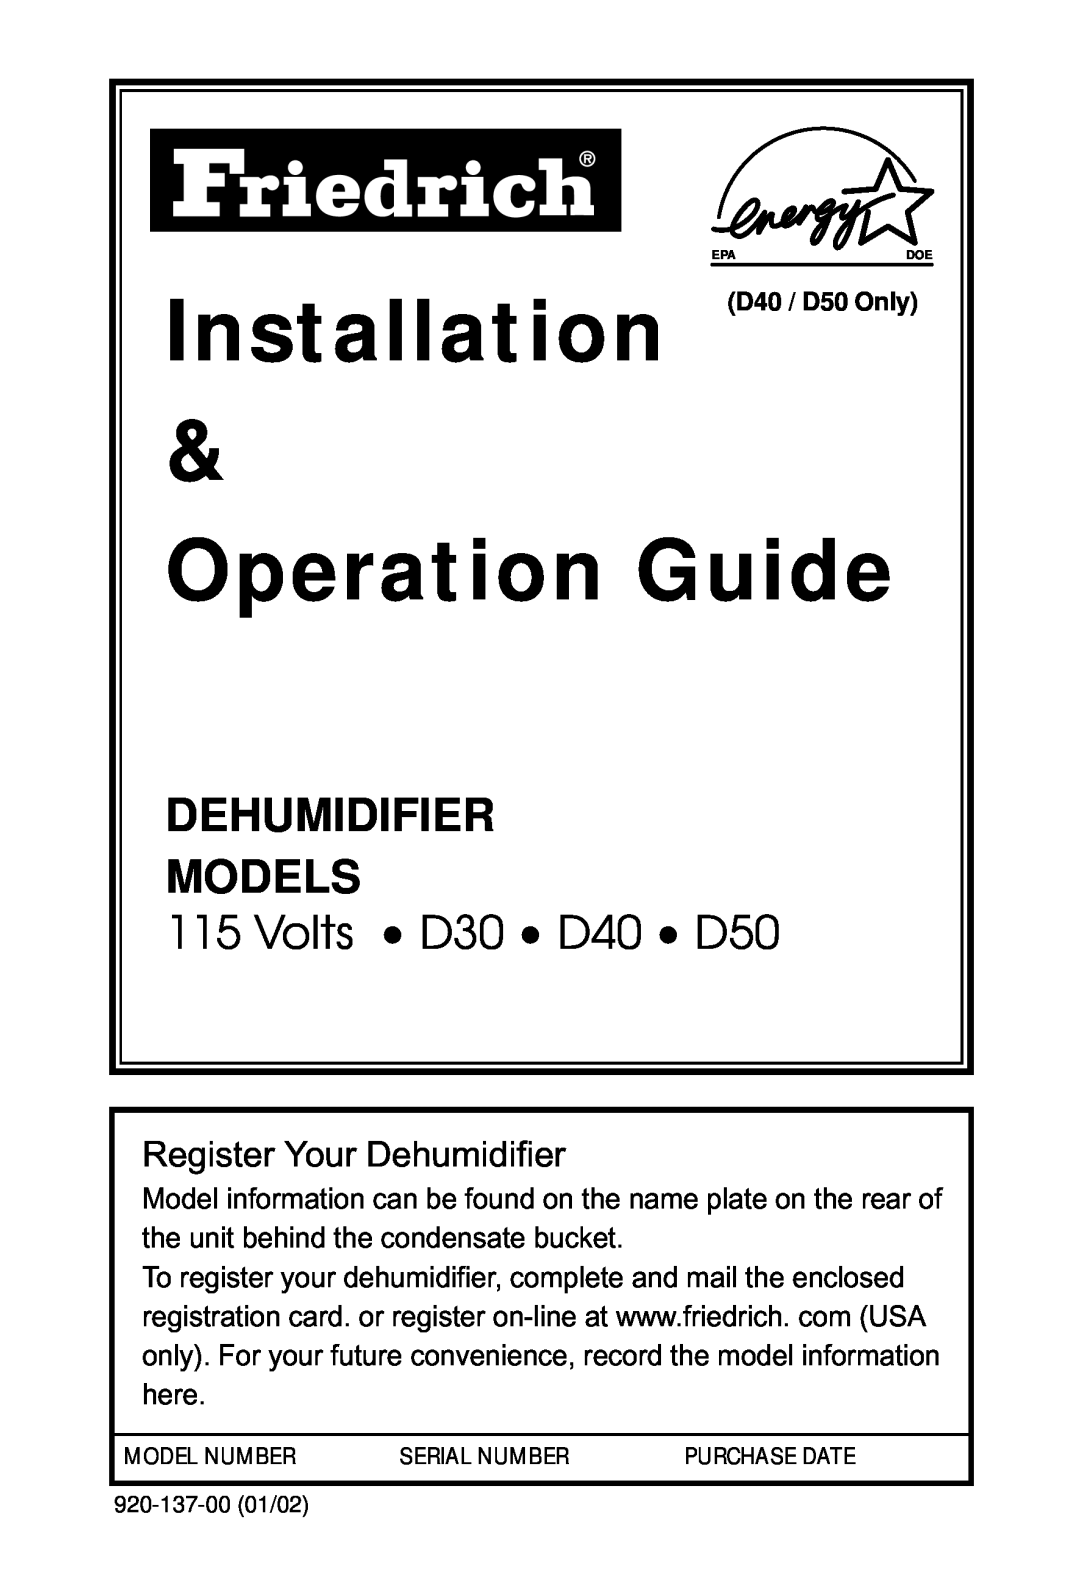 Friedrich manual Installation D40 / D50 Only, Operation Guide, Dehumidifier Models, Volts D30 D40 D50, Model Number 